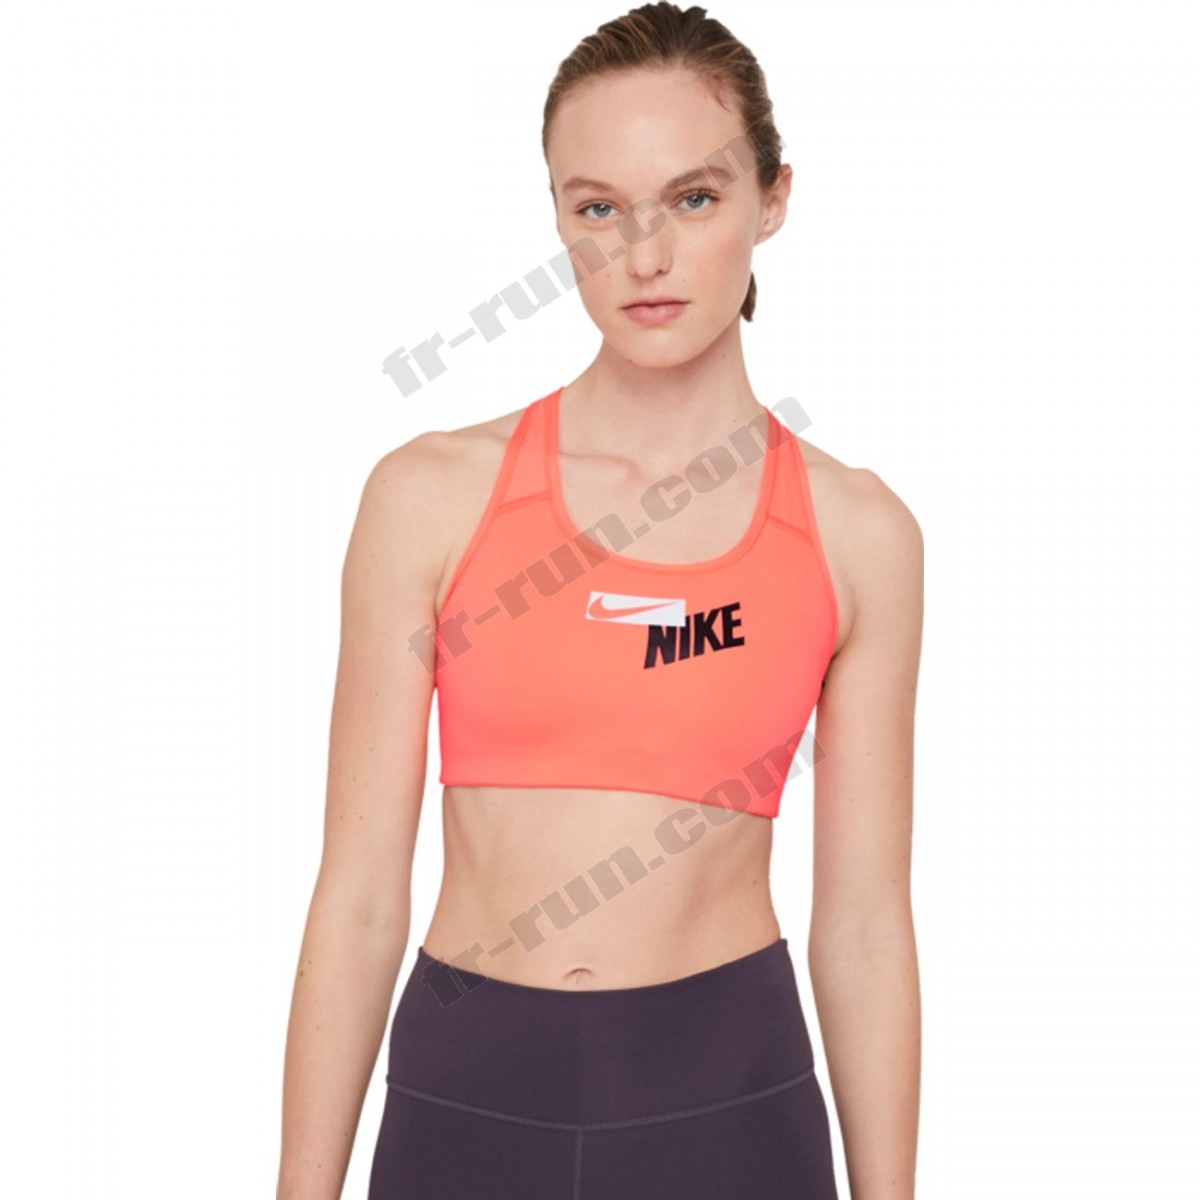 Nike/BRASSIERE Fitness femme NIKE SWOOSH LOGO PAD ◇◇◇ Pas Cher Du Tout - -3